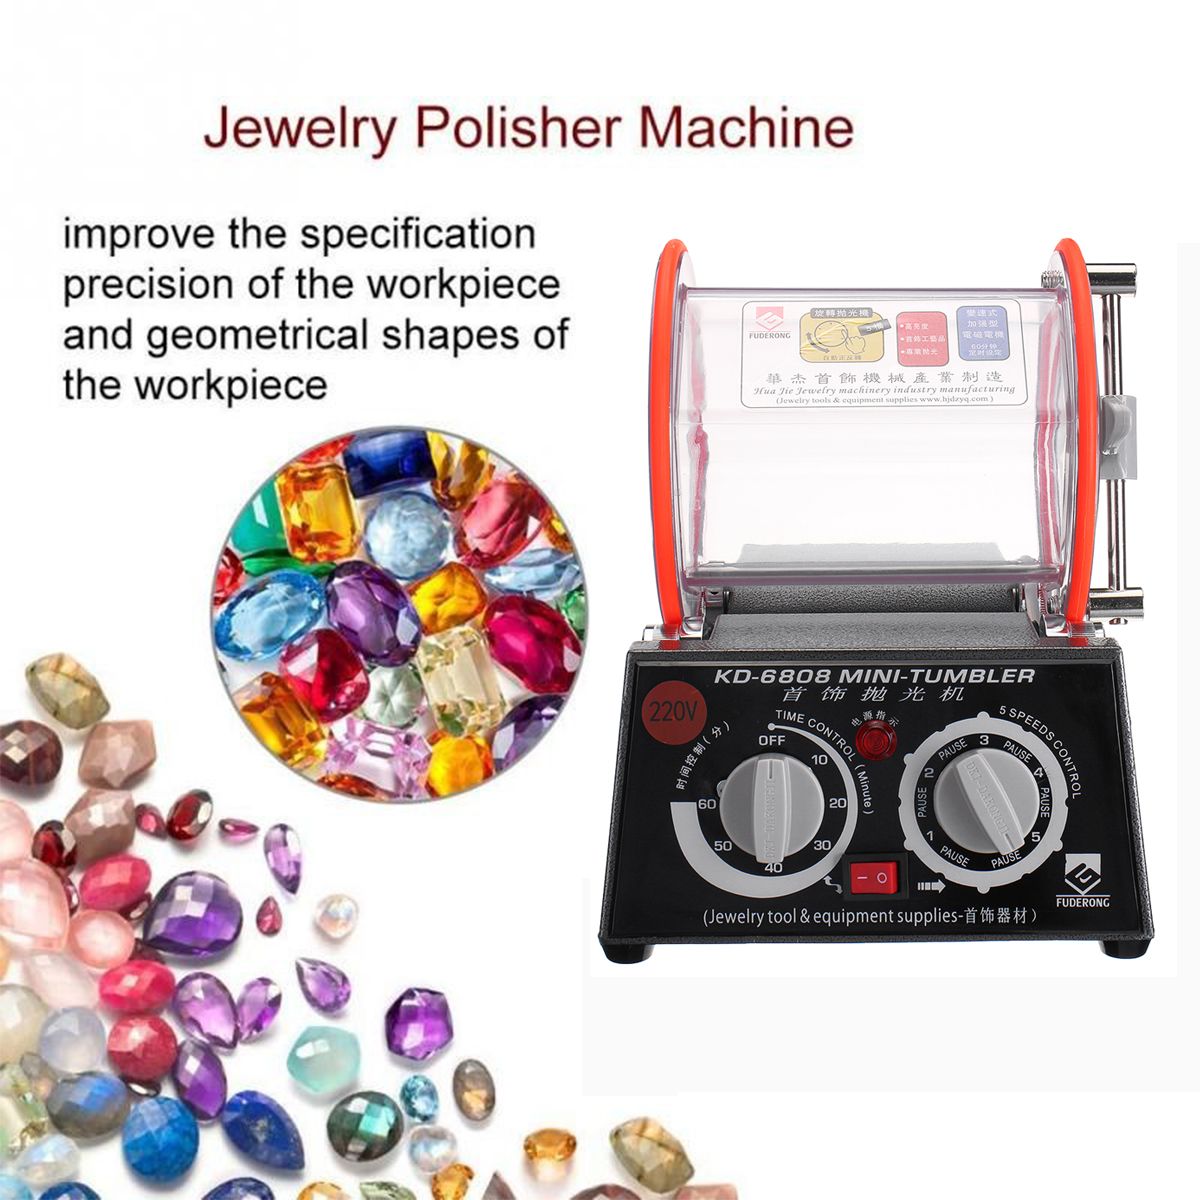 220V-Rotary-Tumbler-Jewelry-Polisher-Machine-Polishing-Bead-Cleaner-Jewelry-1758751